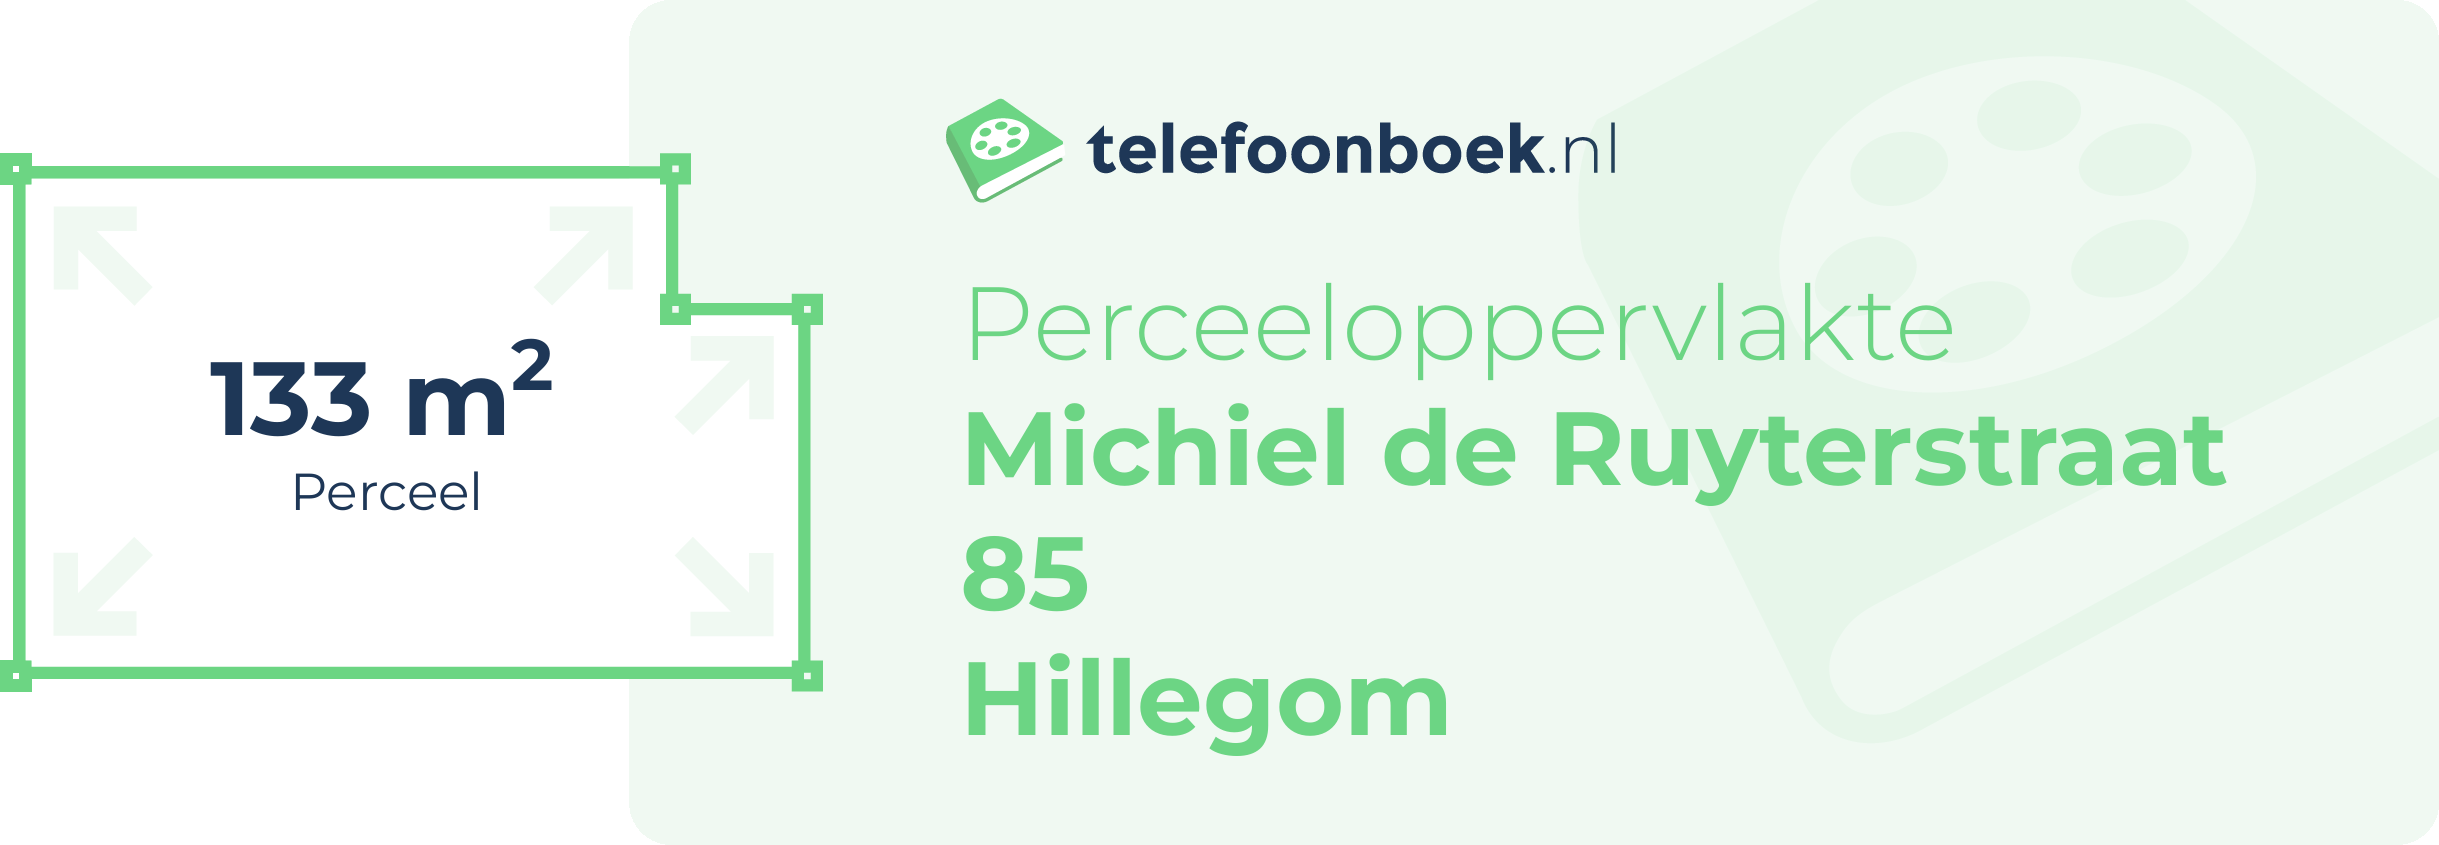 Perceeloppervlakte Michiel De Ruyterstraat 85 Hillegom